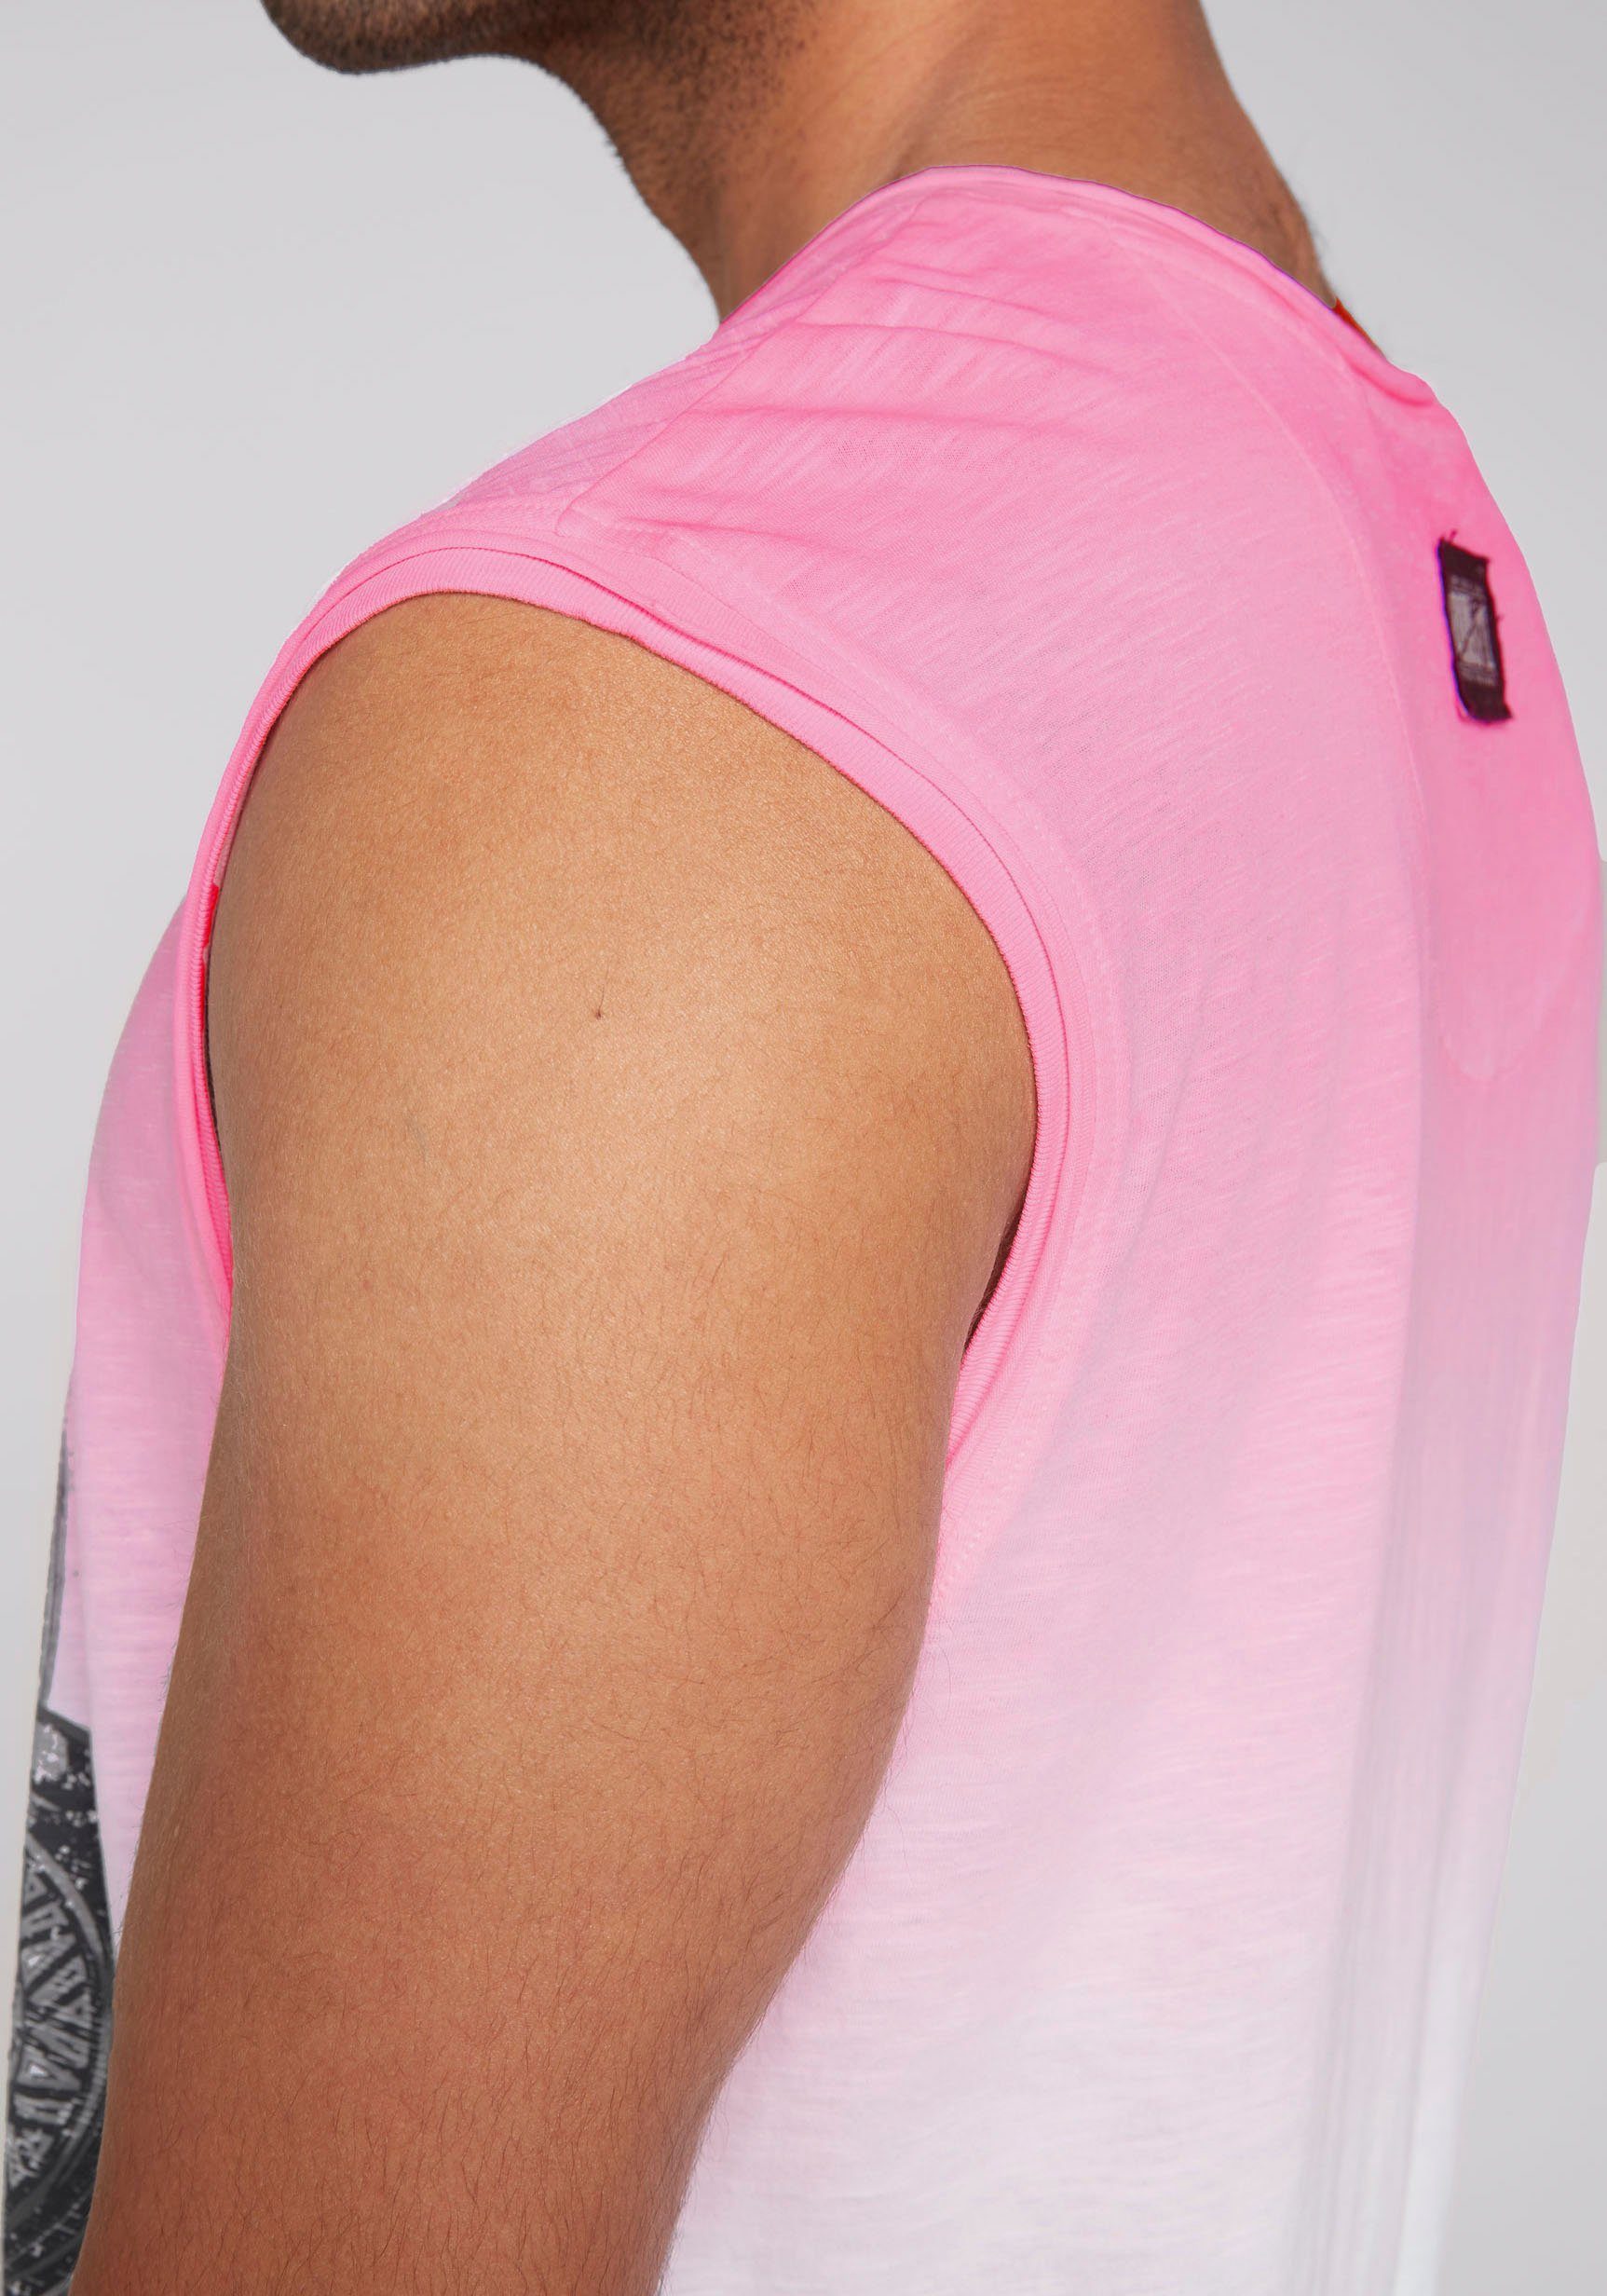 V-Shirt pink DAVID / CAMP neon opticwhite